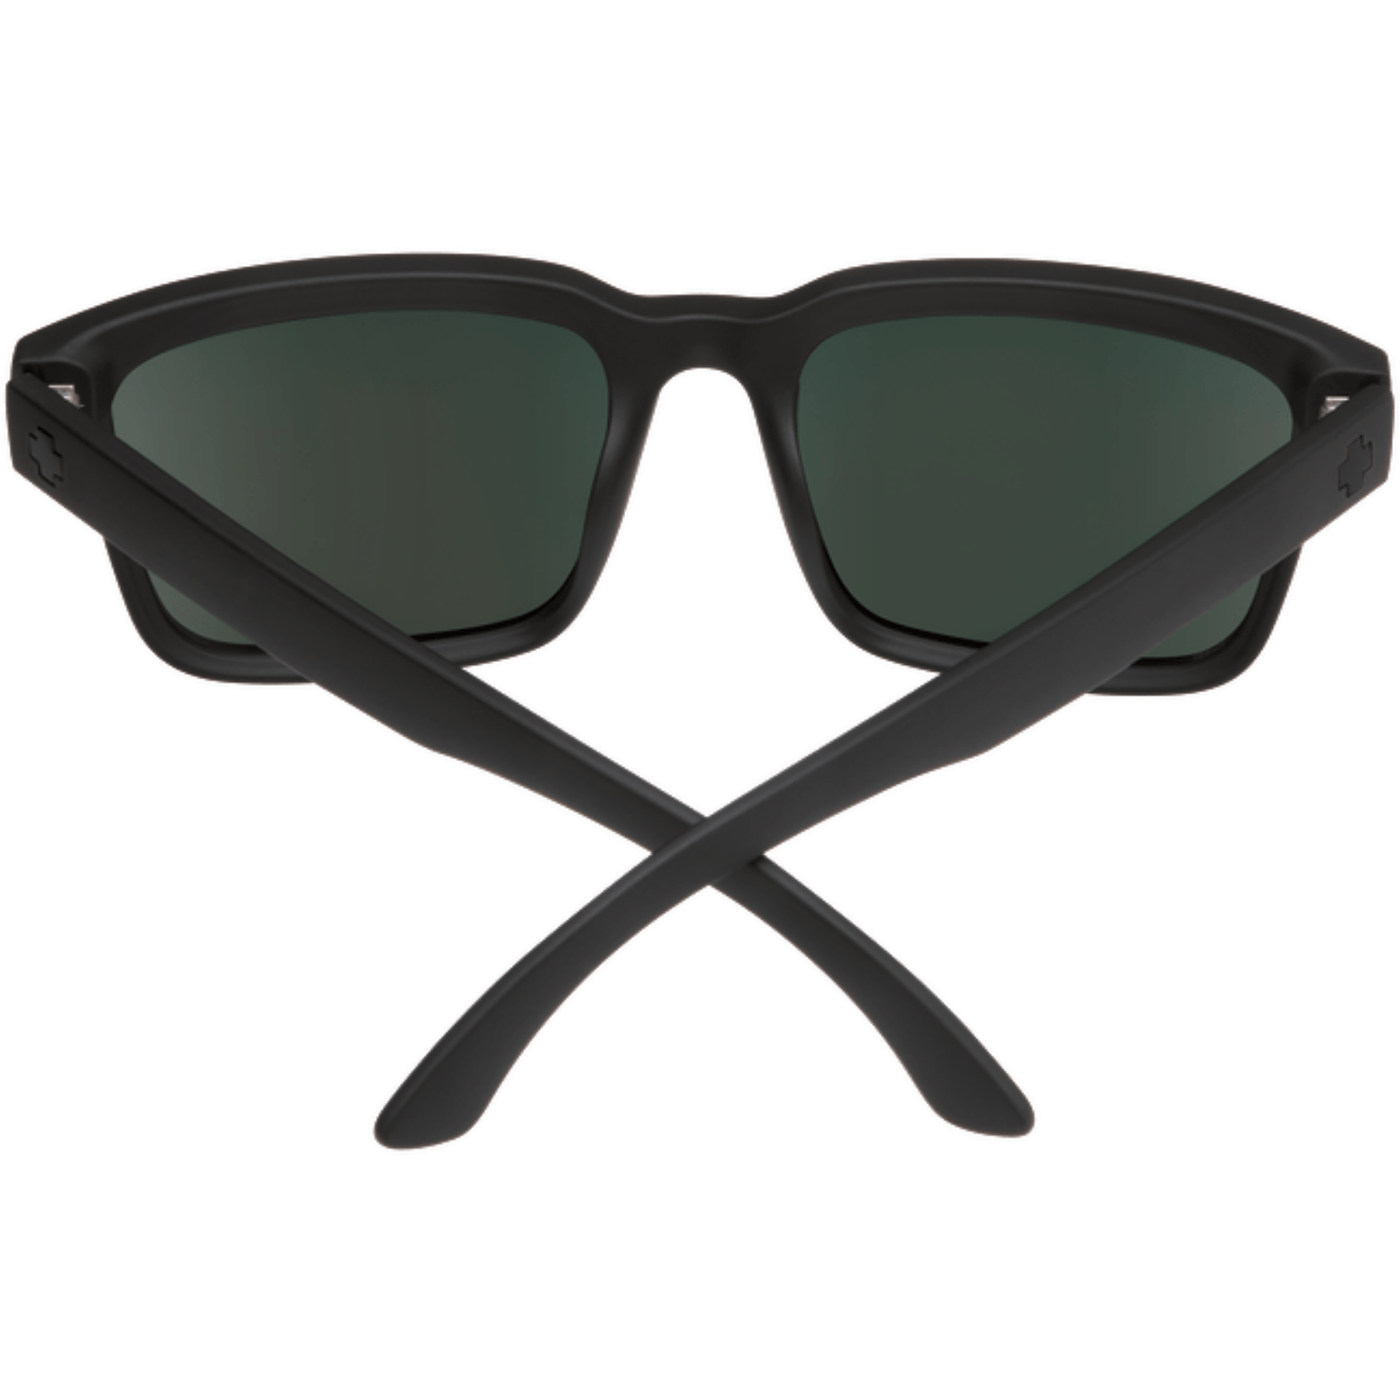 SPY HELM 2 Polarized Sunglasses, Happy Lens - SOSI Matte Polar 8Lines Shop - Fast Shipping